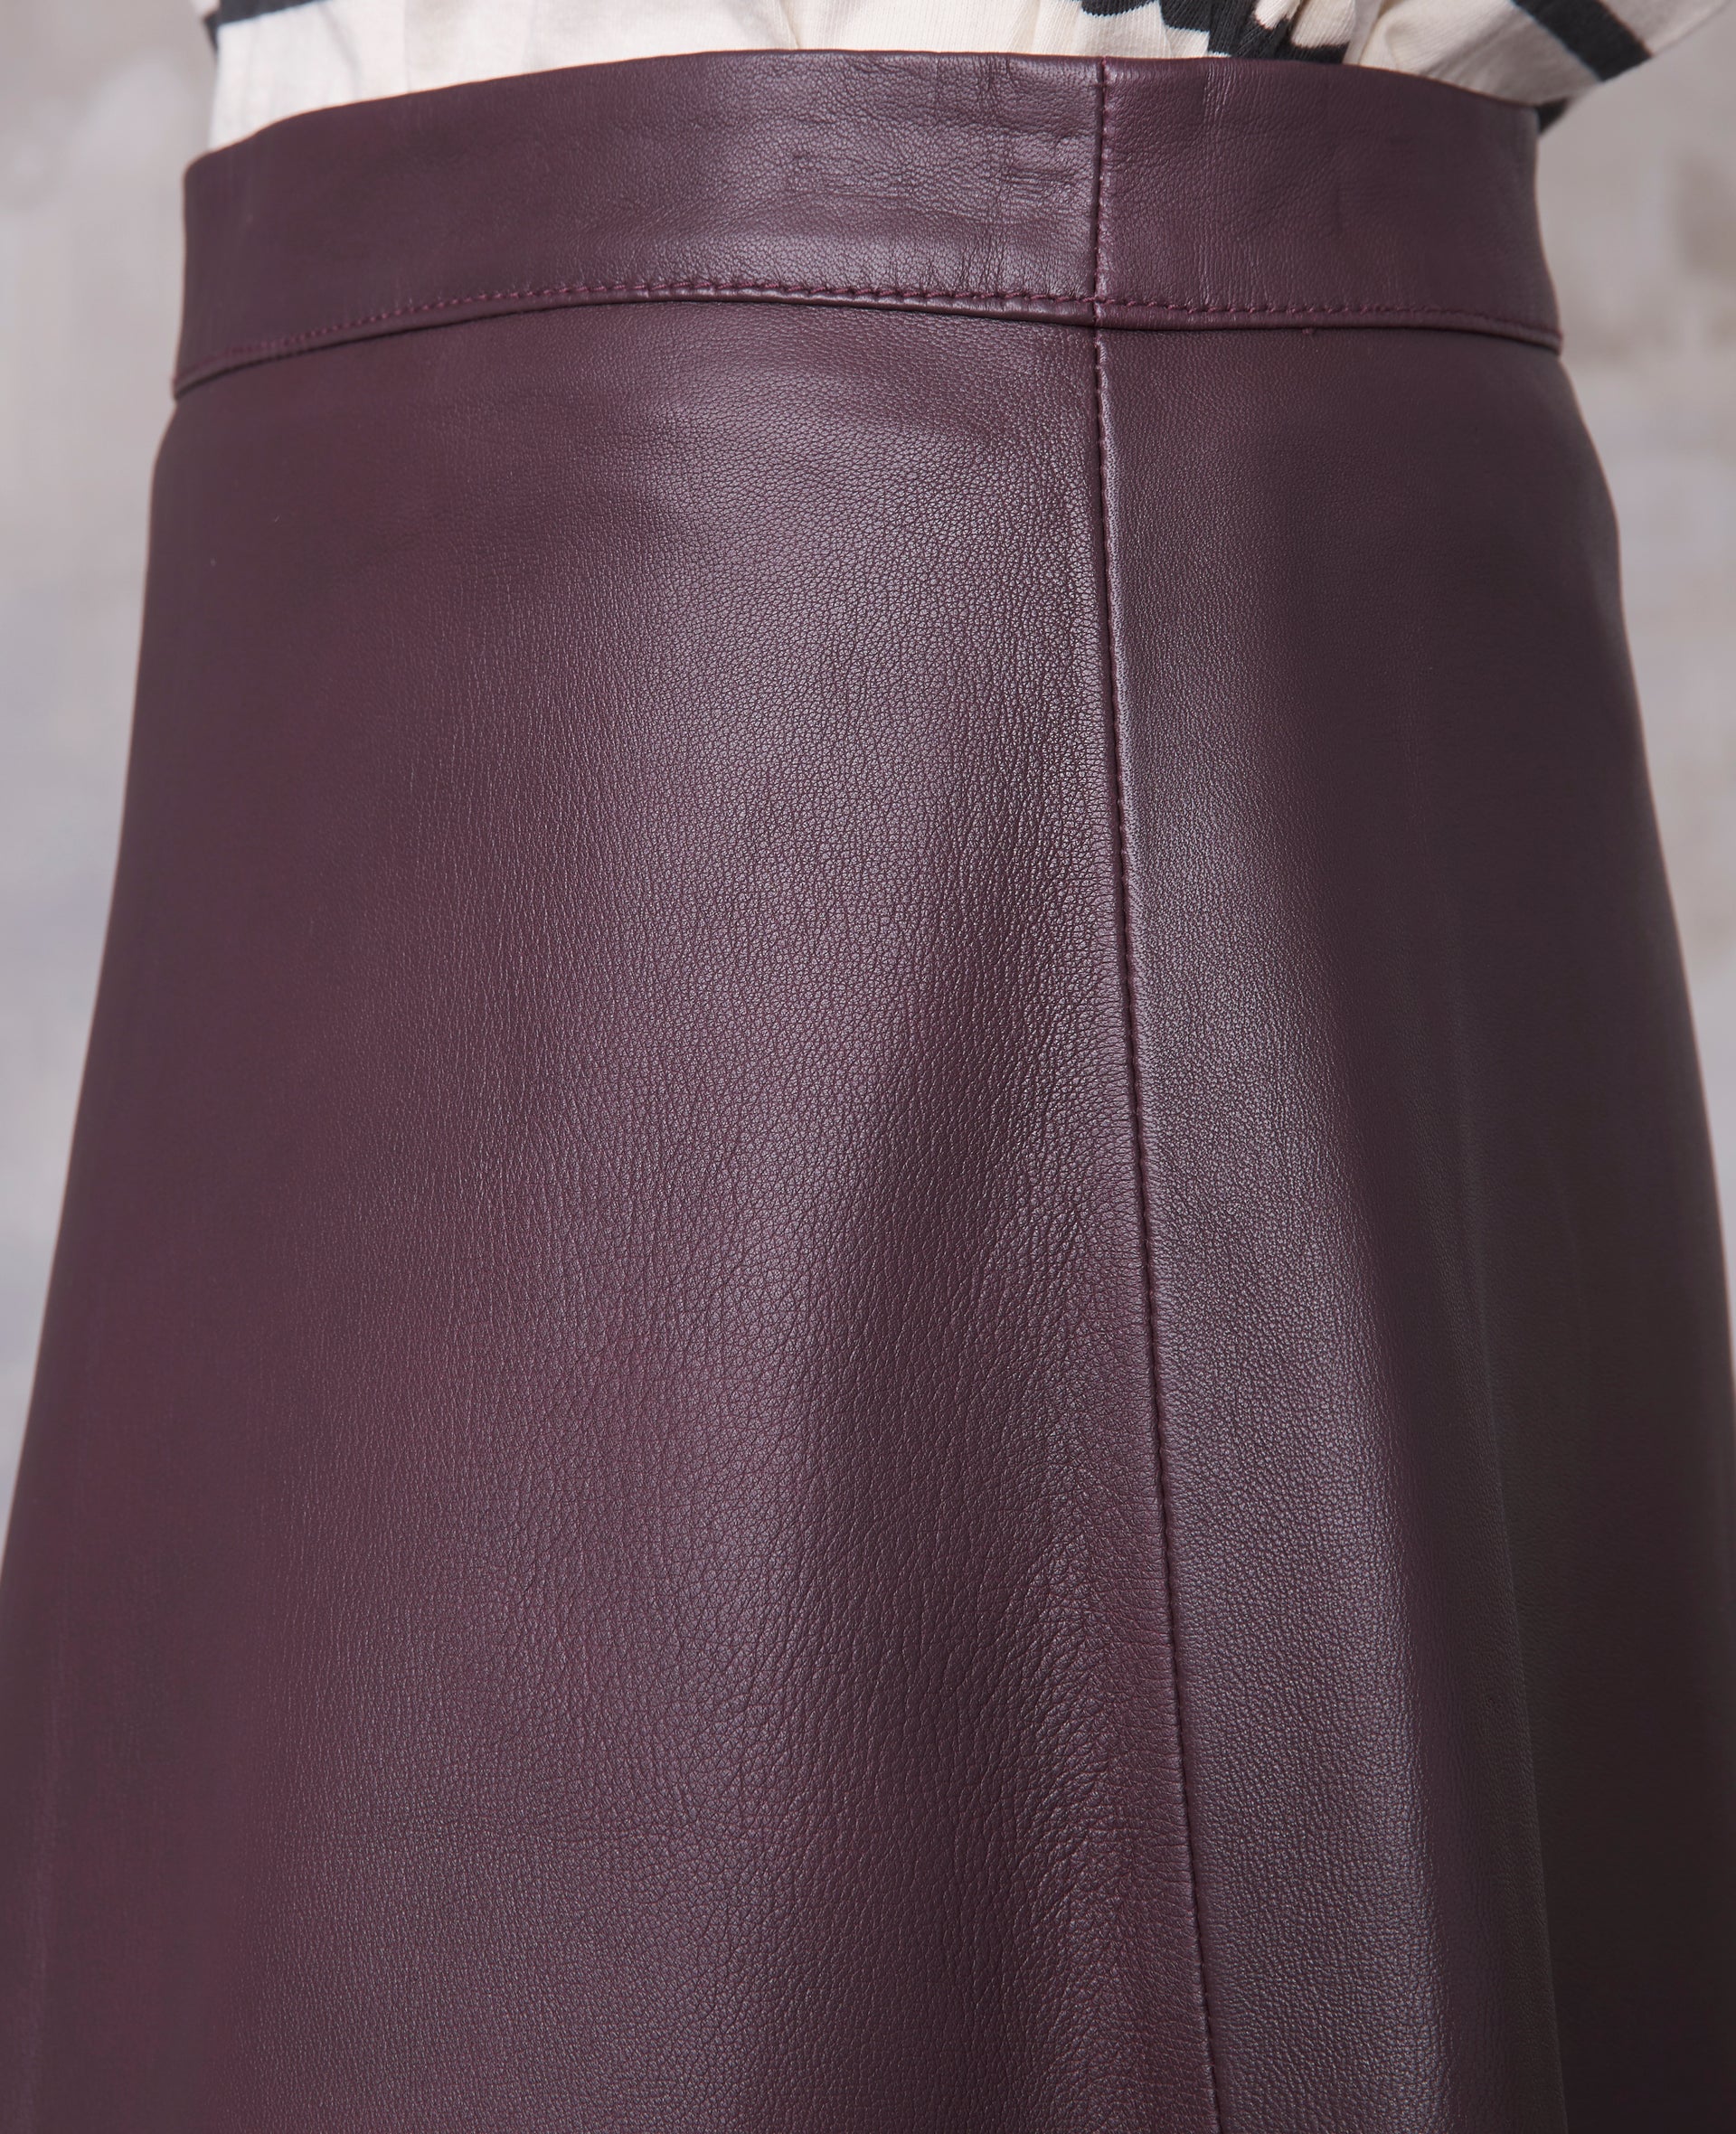 Ottavia skirt - Image 4